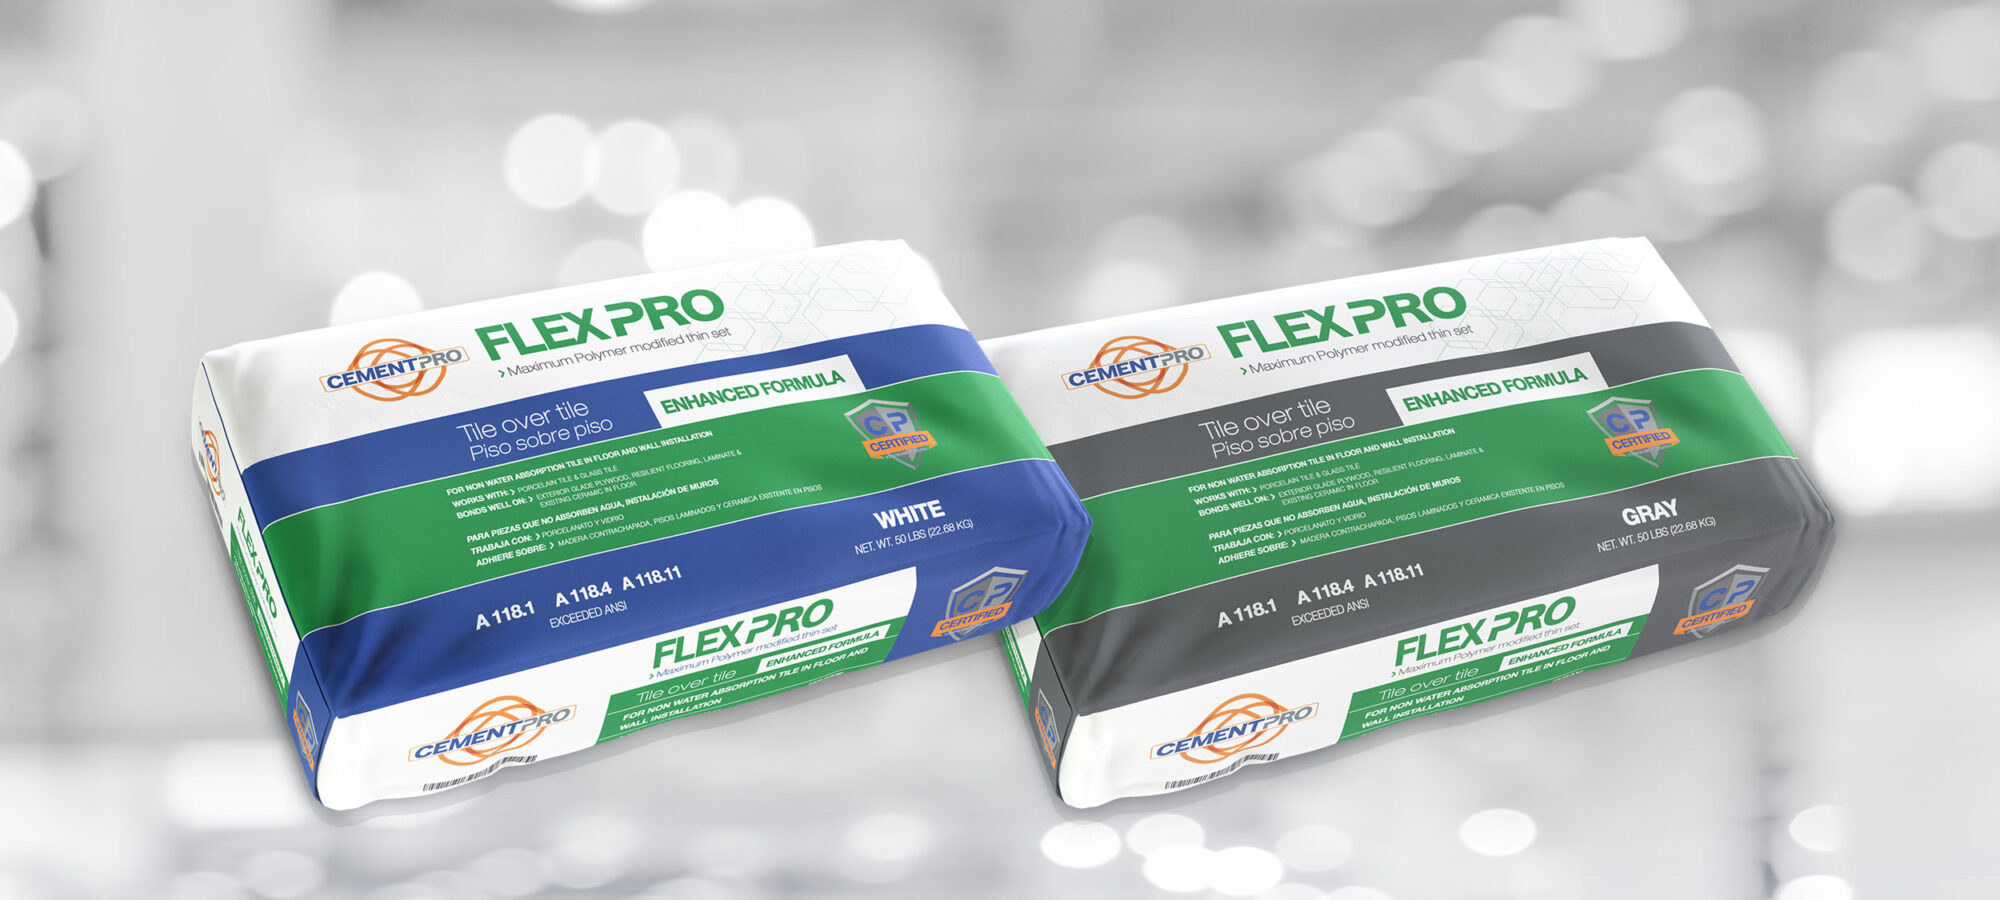 Flex Pro Product